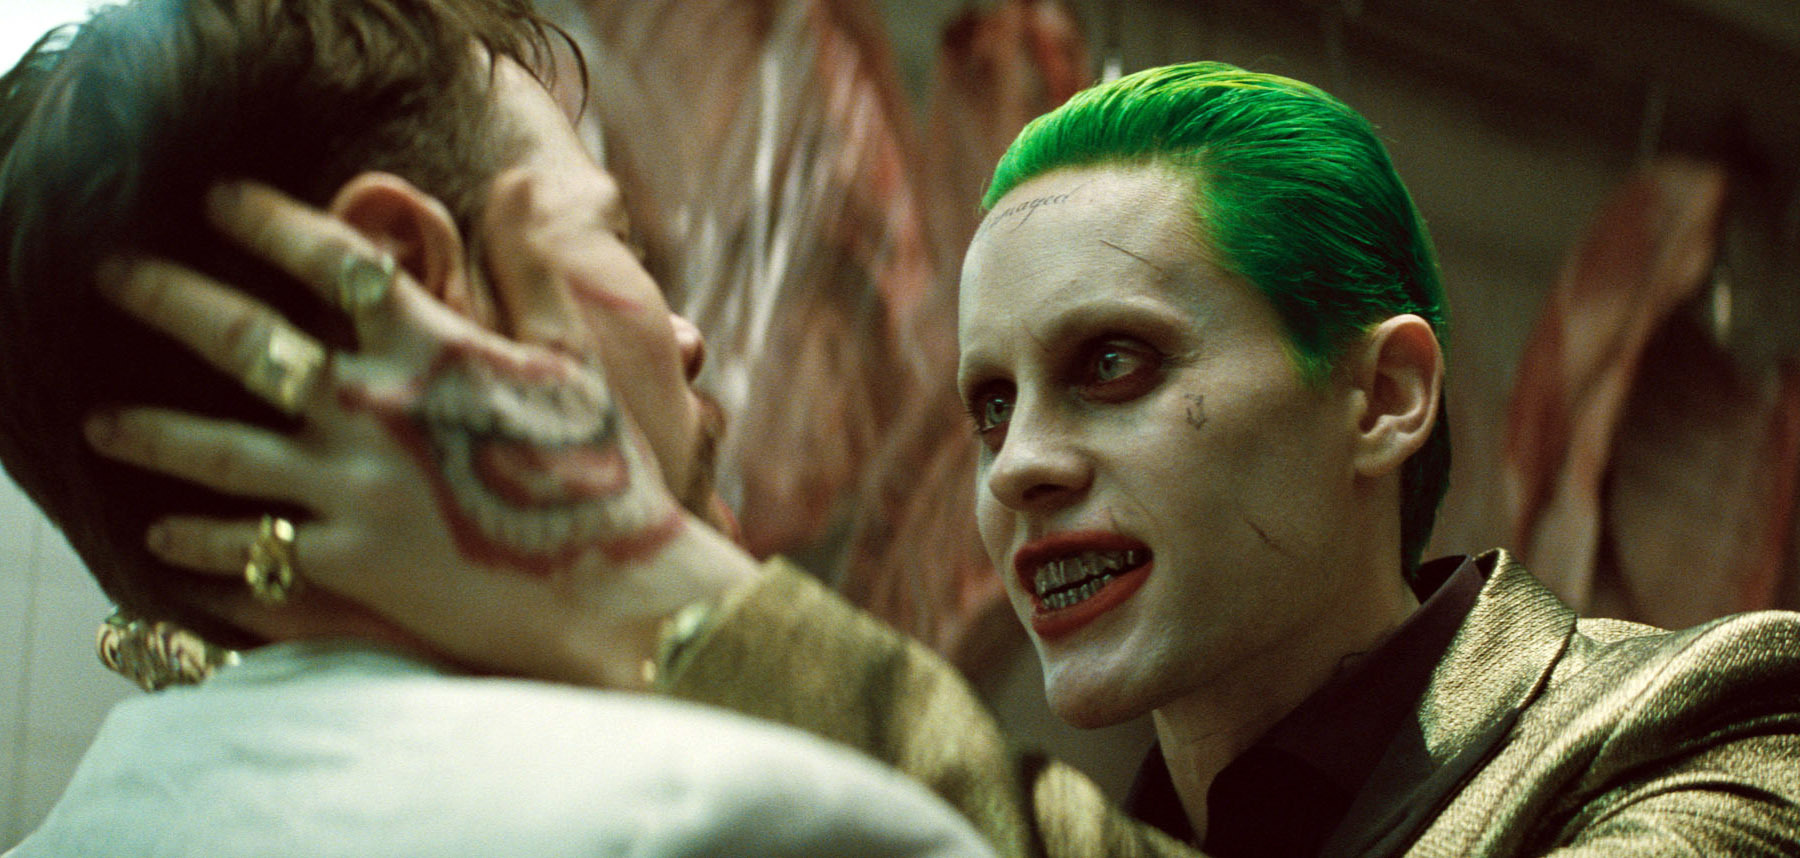 Jared Leto's deleted Joker scenes to be released - NZ Herald